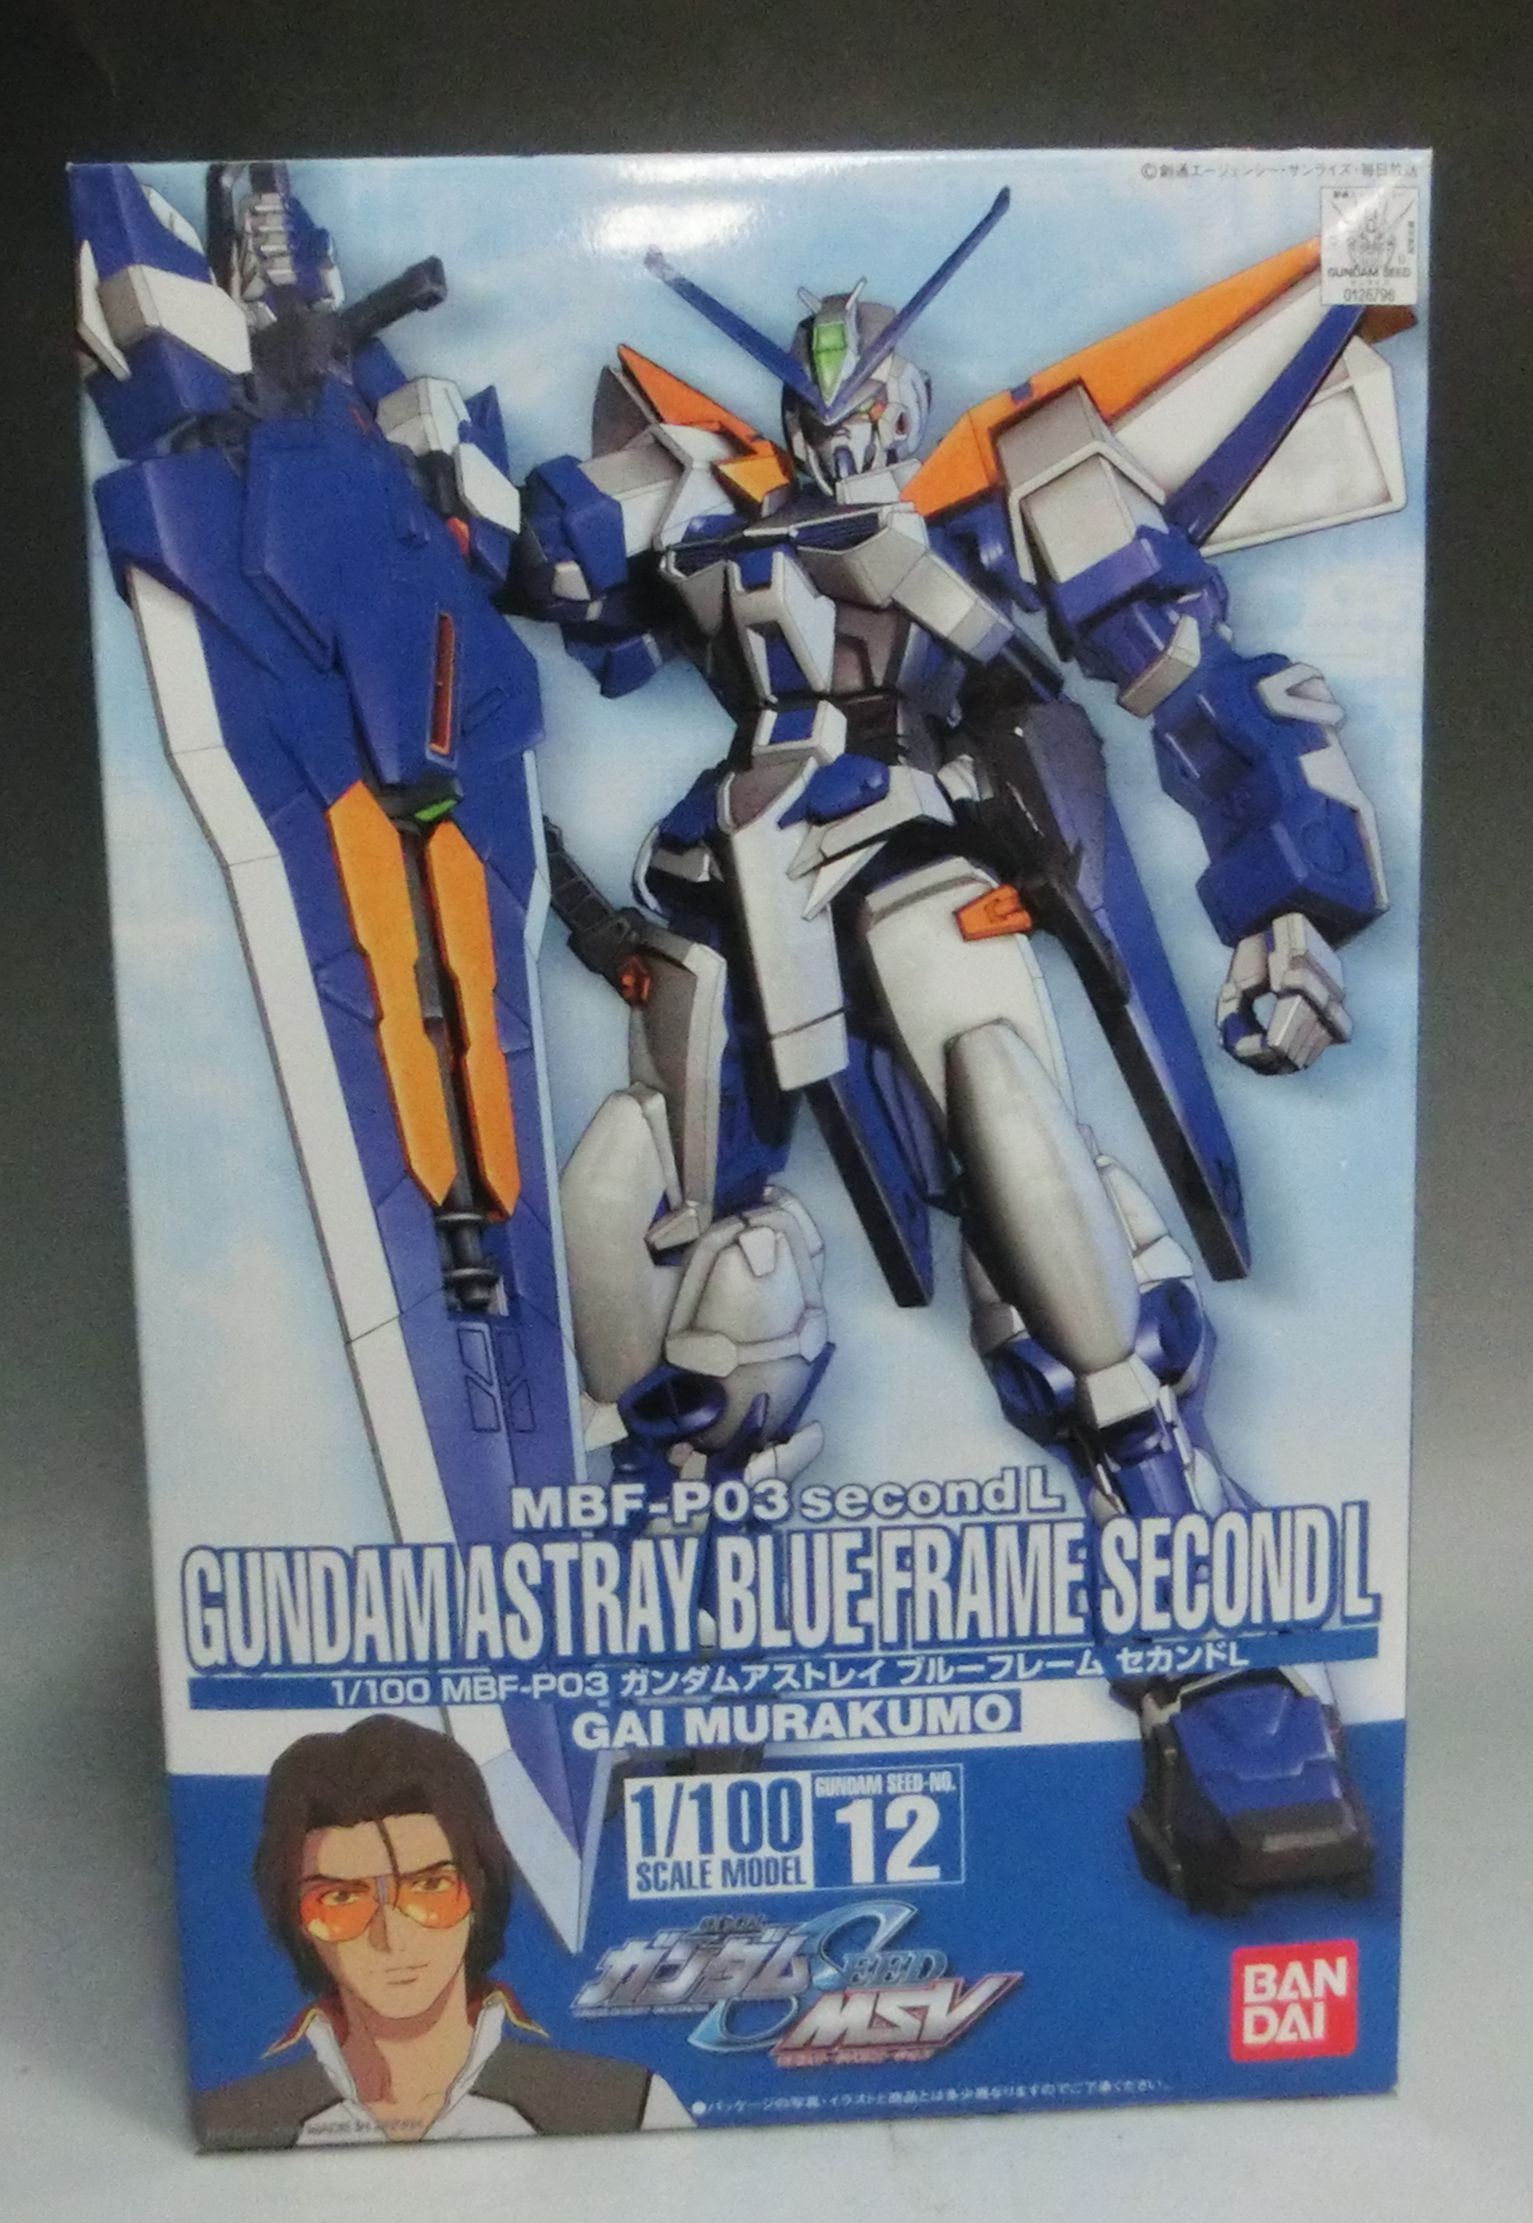 1/100 Gundam Astray Blue Frame Second Revise